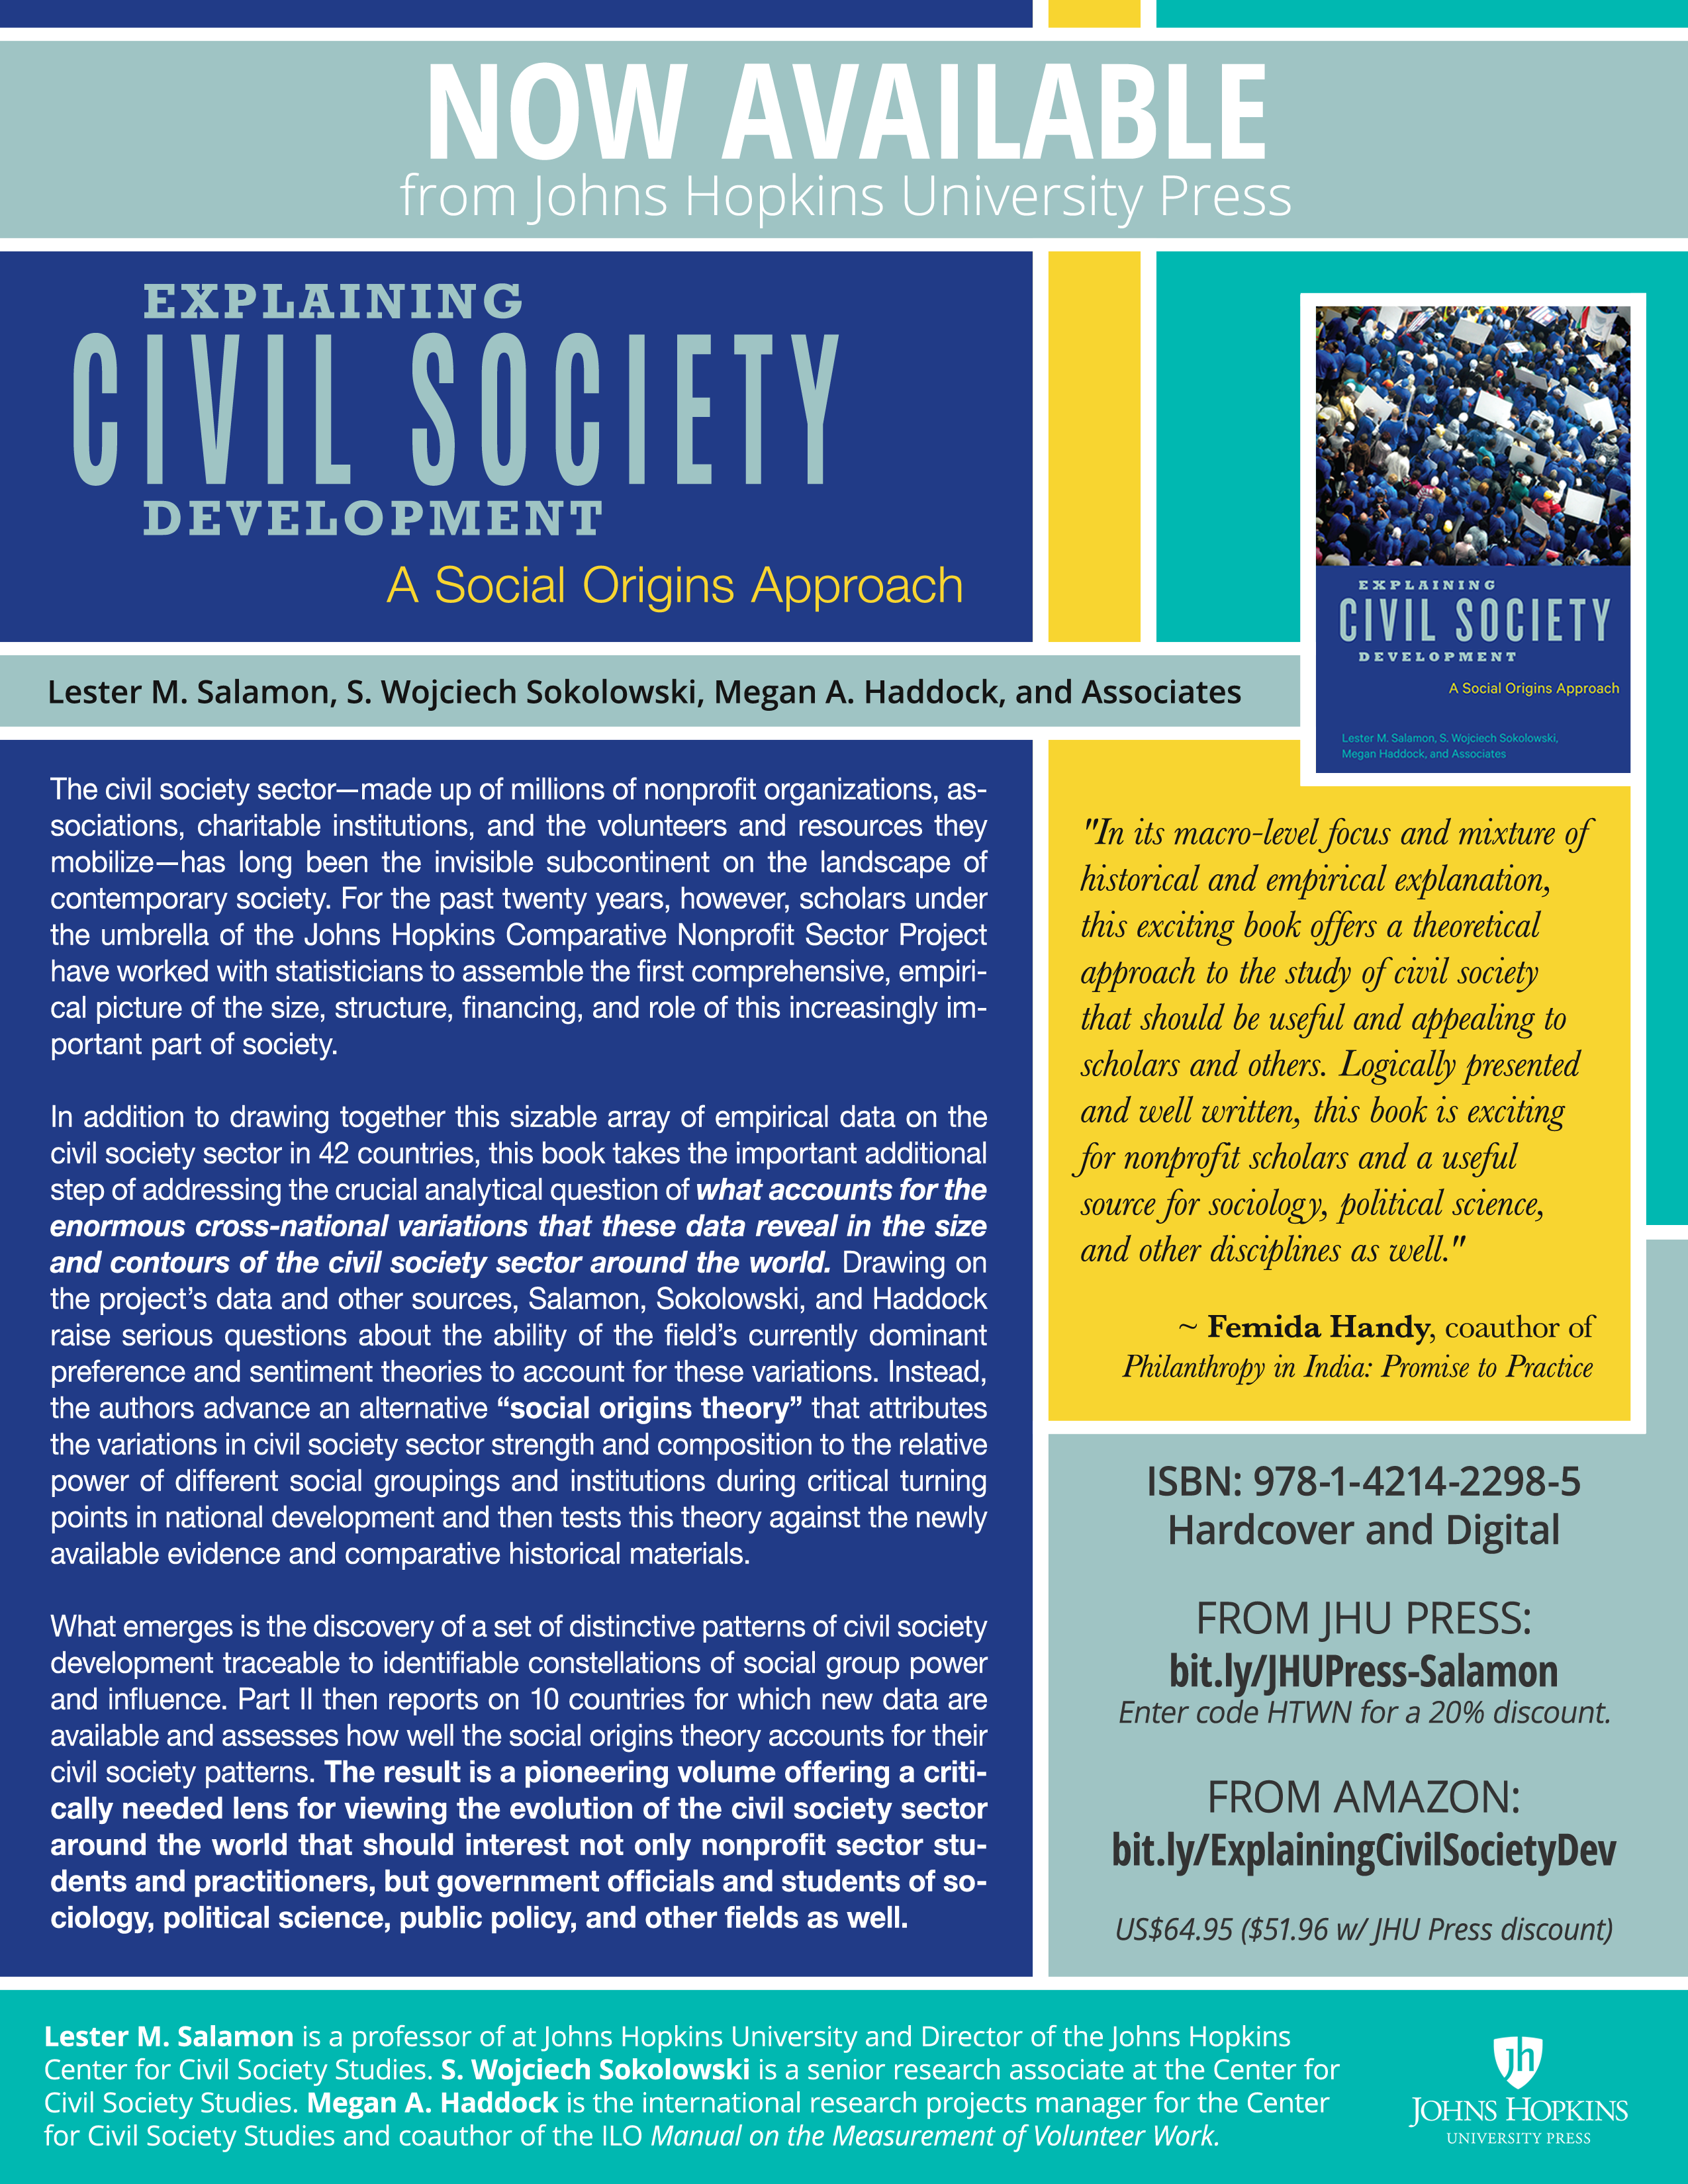 Explaining Civil Society Development: A Social Origins Approach flyer (2017)